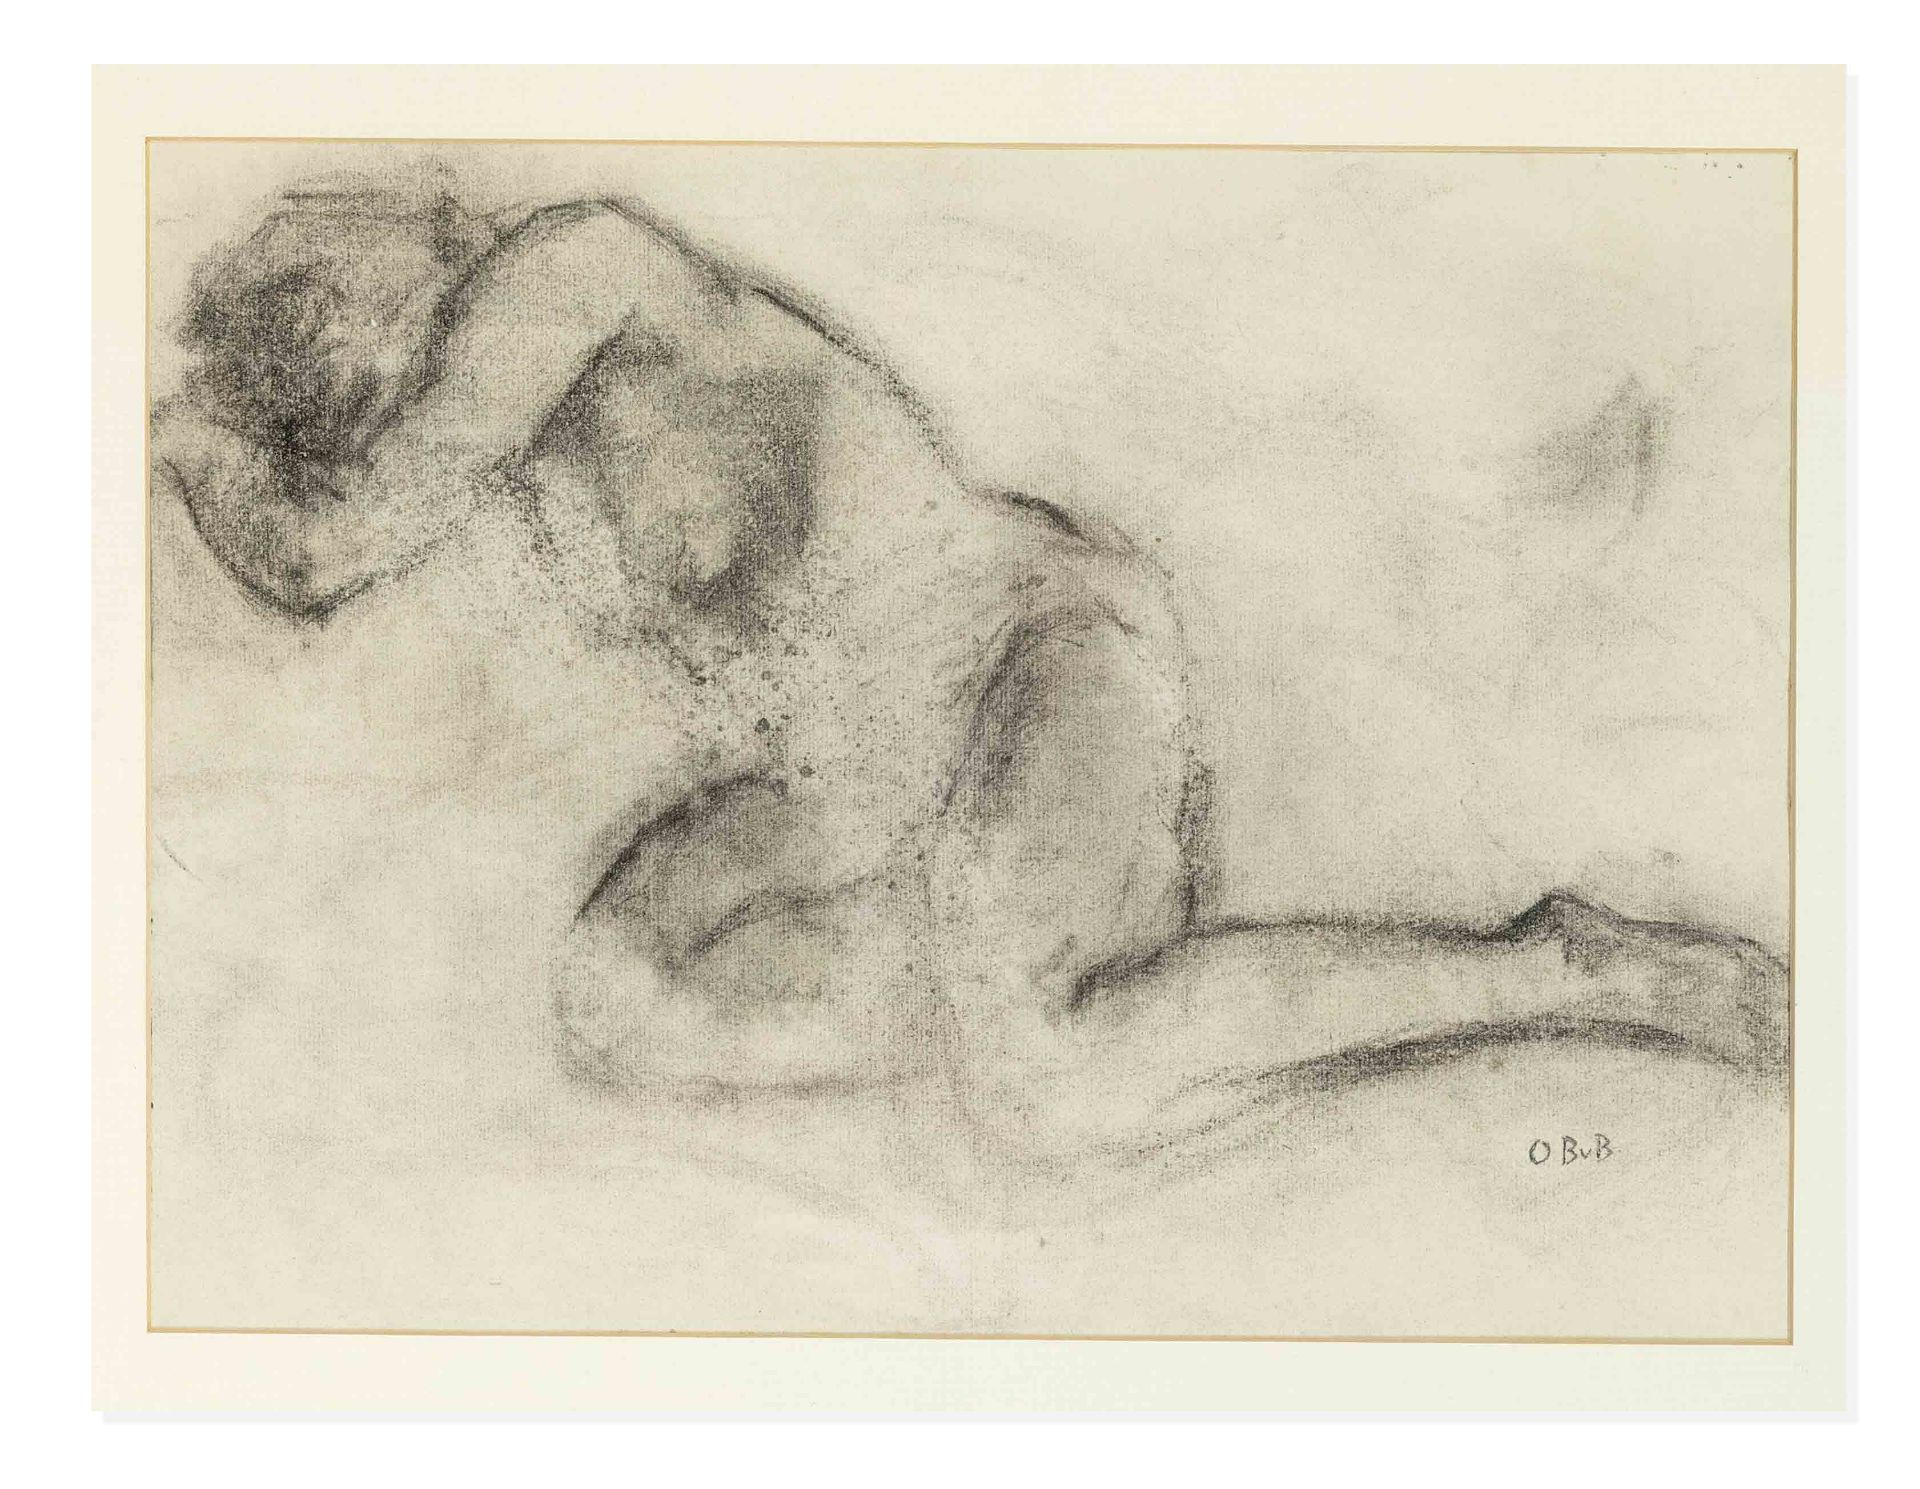 Bontjes van Beek, Olga. 1896 - Fischerhude - 1995. Female nude. Charcoal drawing, monogrammed O BvB.